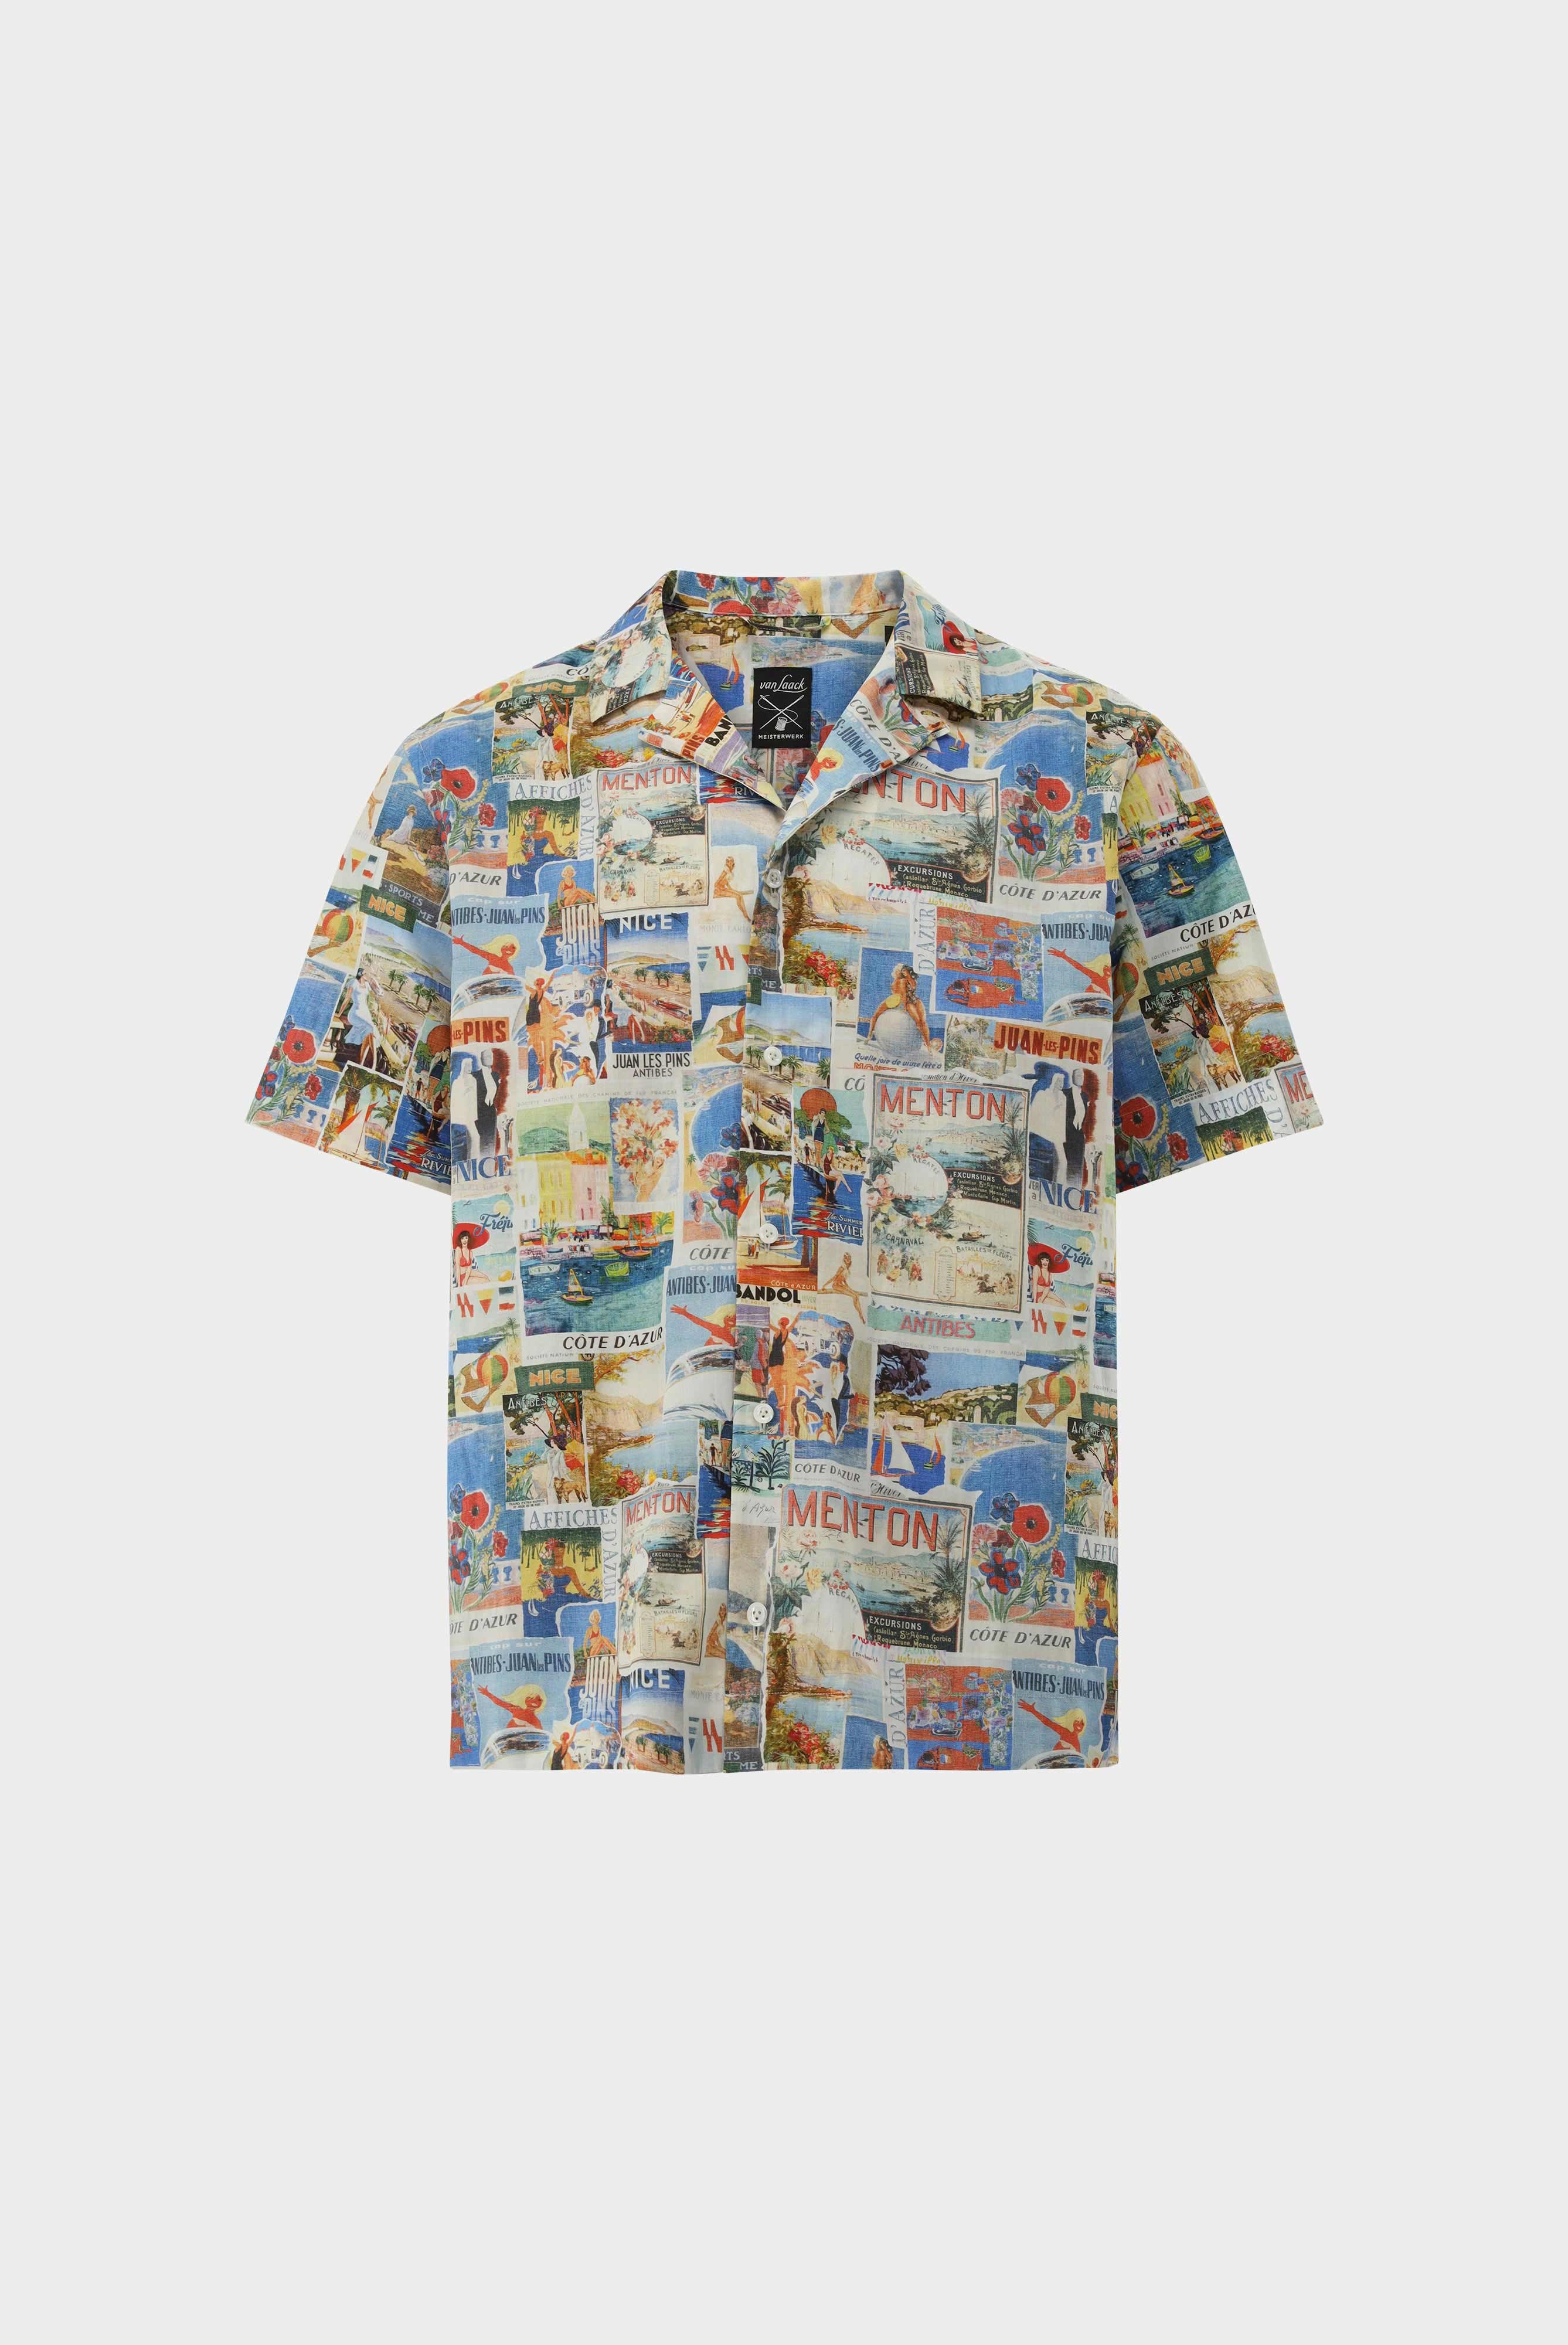 Casual Shirts+Printed Short Sleeve Shirt+20.2075.RD.170194.743.M